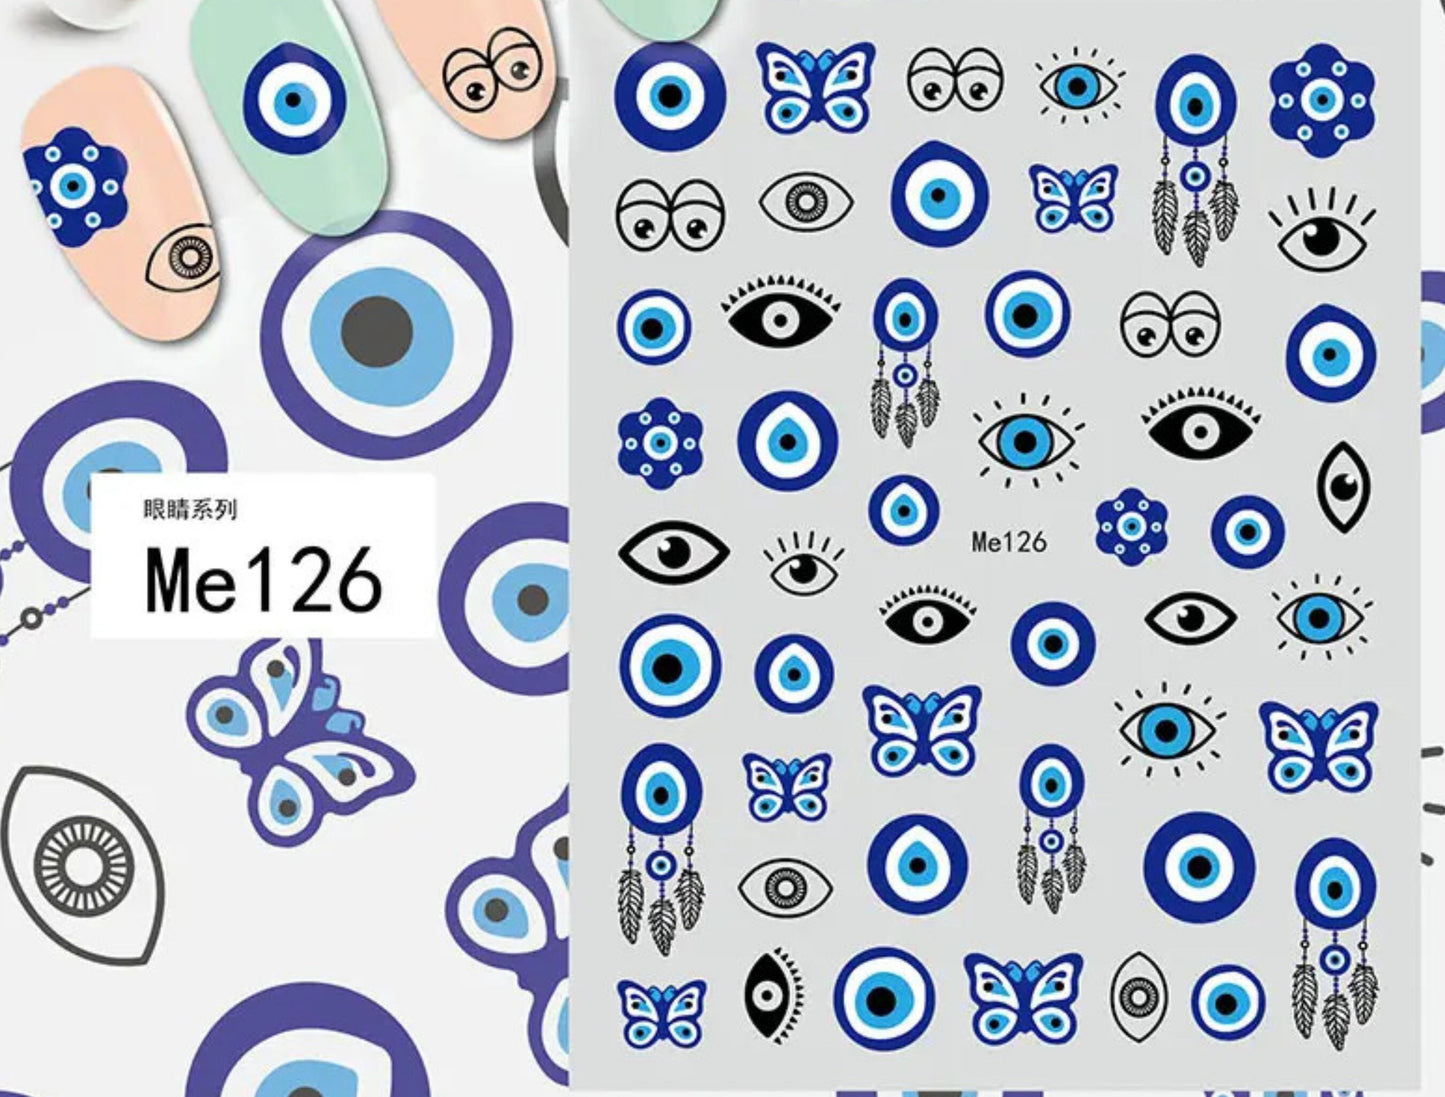 Evil Eye Nail Decals, Eye Nail Stickers, Eye Nail Decal, Cute Eye Nail Decals, Light Blue and Dark Blue Nail Stickers, Stick on Decals